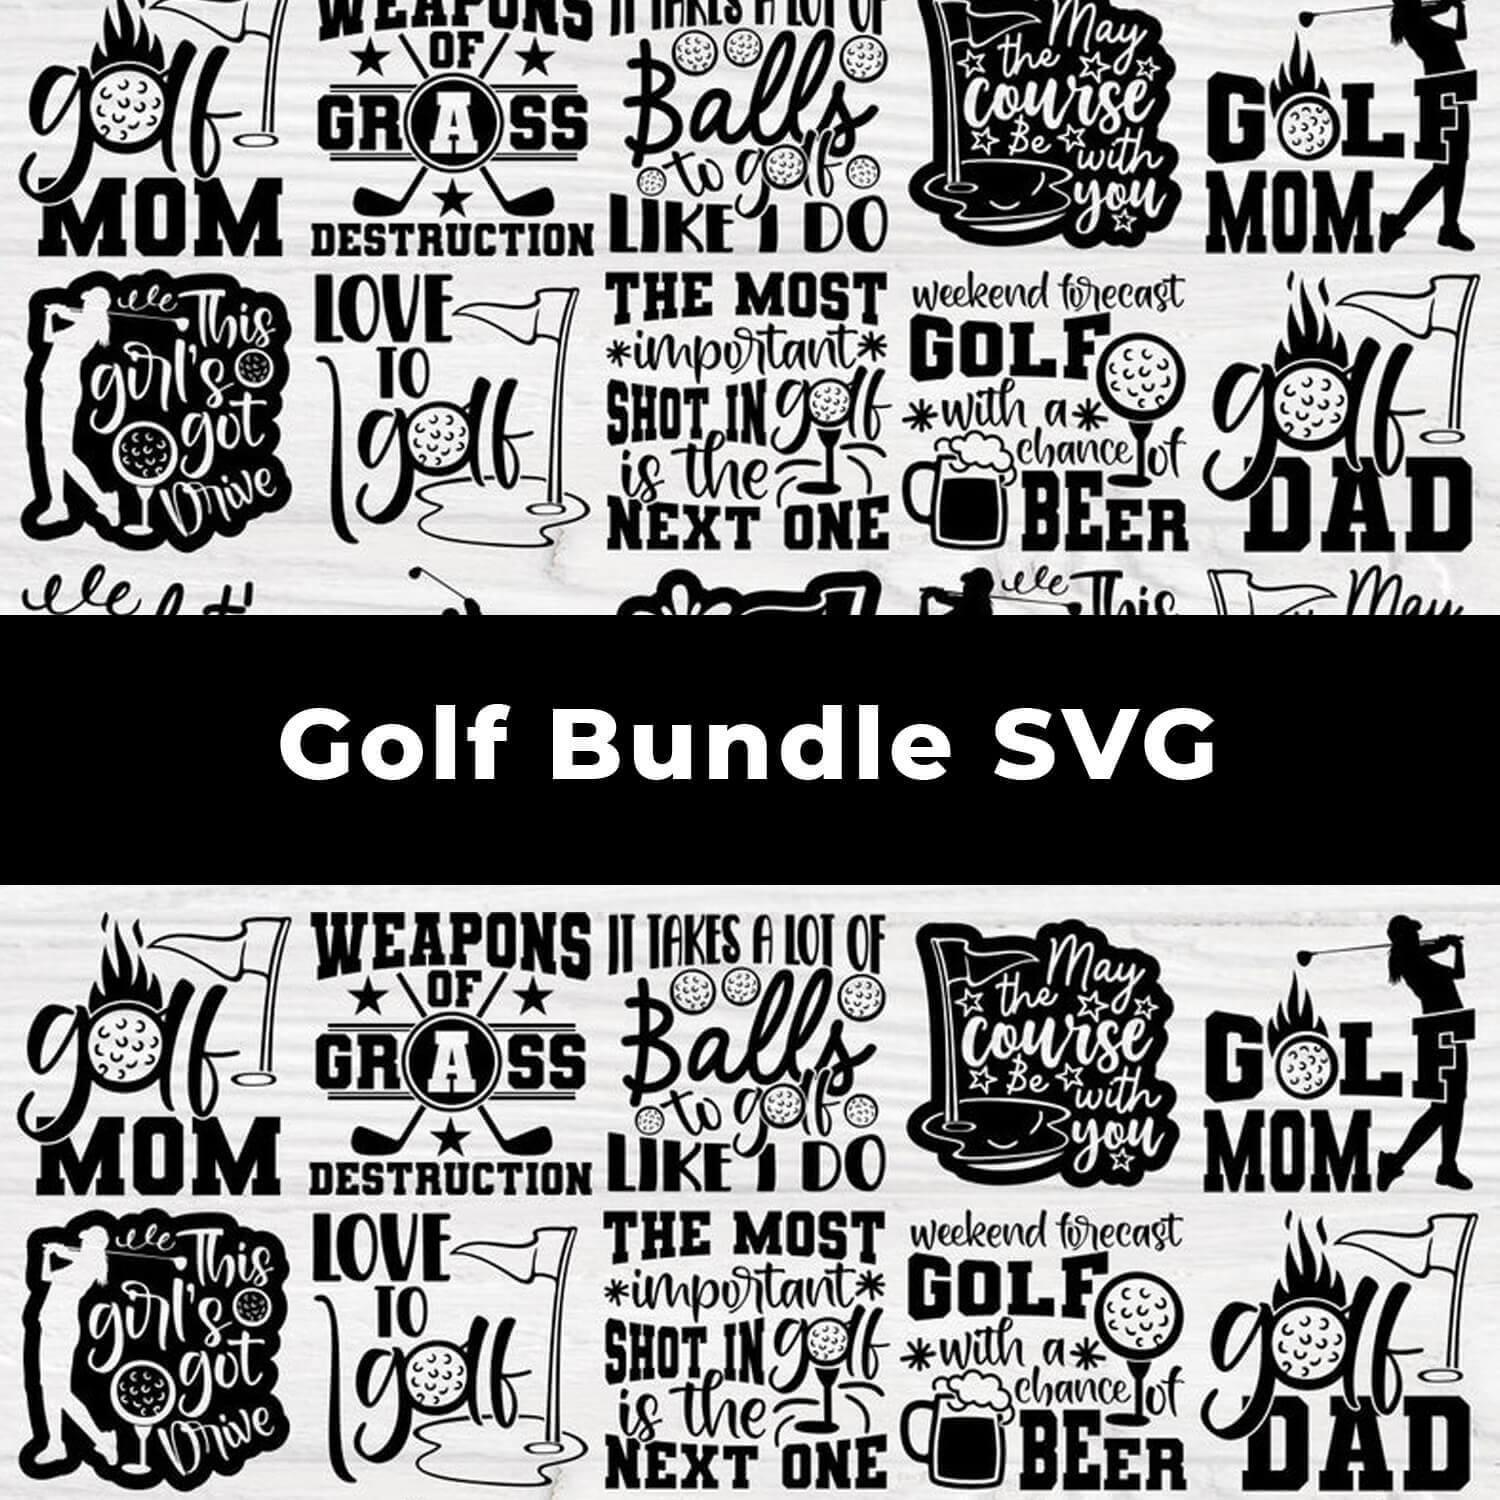 Product Name "Golf Bundle SVG" on black background and black golf logo's on white background.